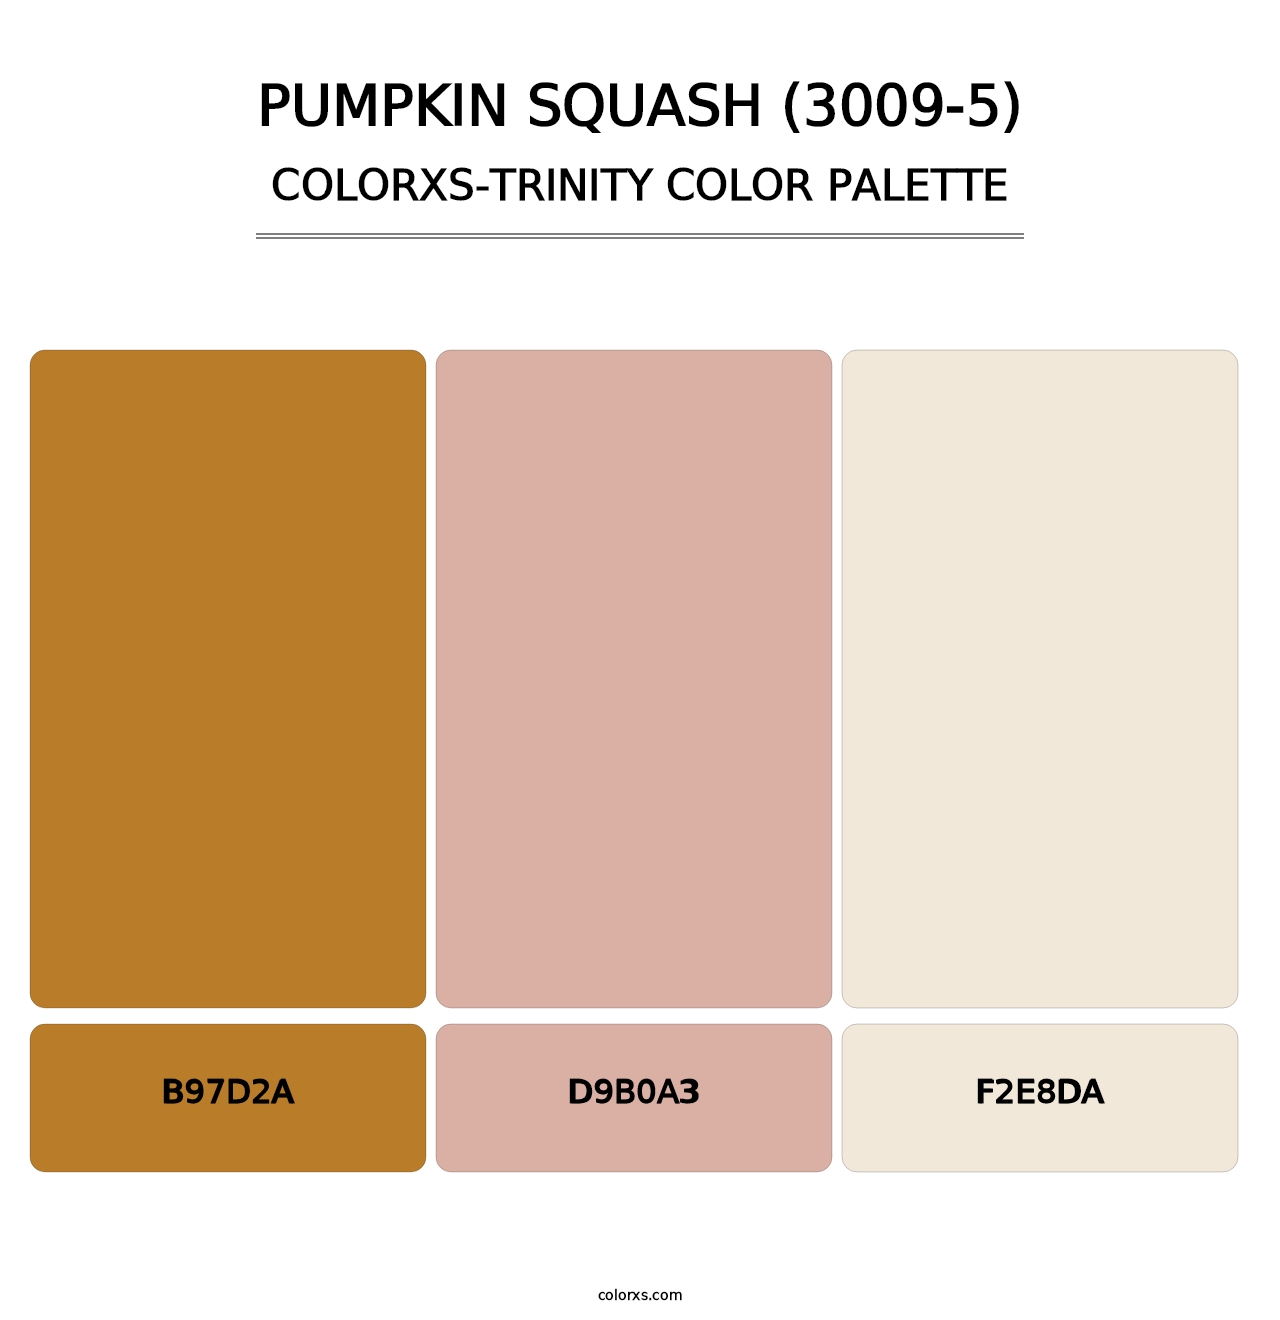 Pumpkin Squash (3009-5) - Colorxs Trinity Palette